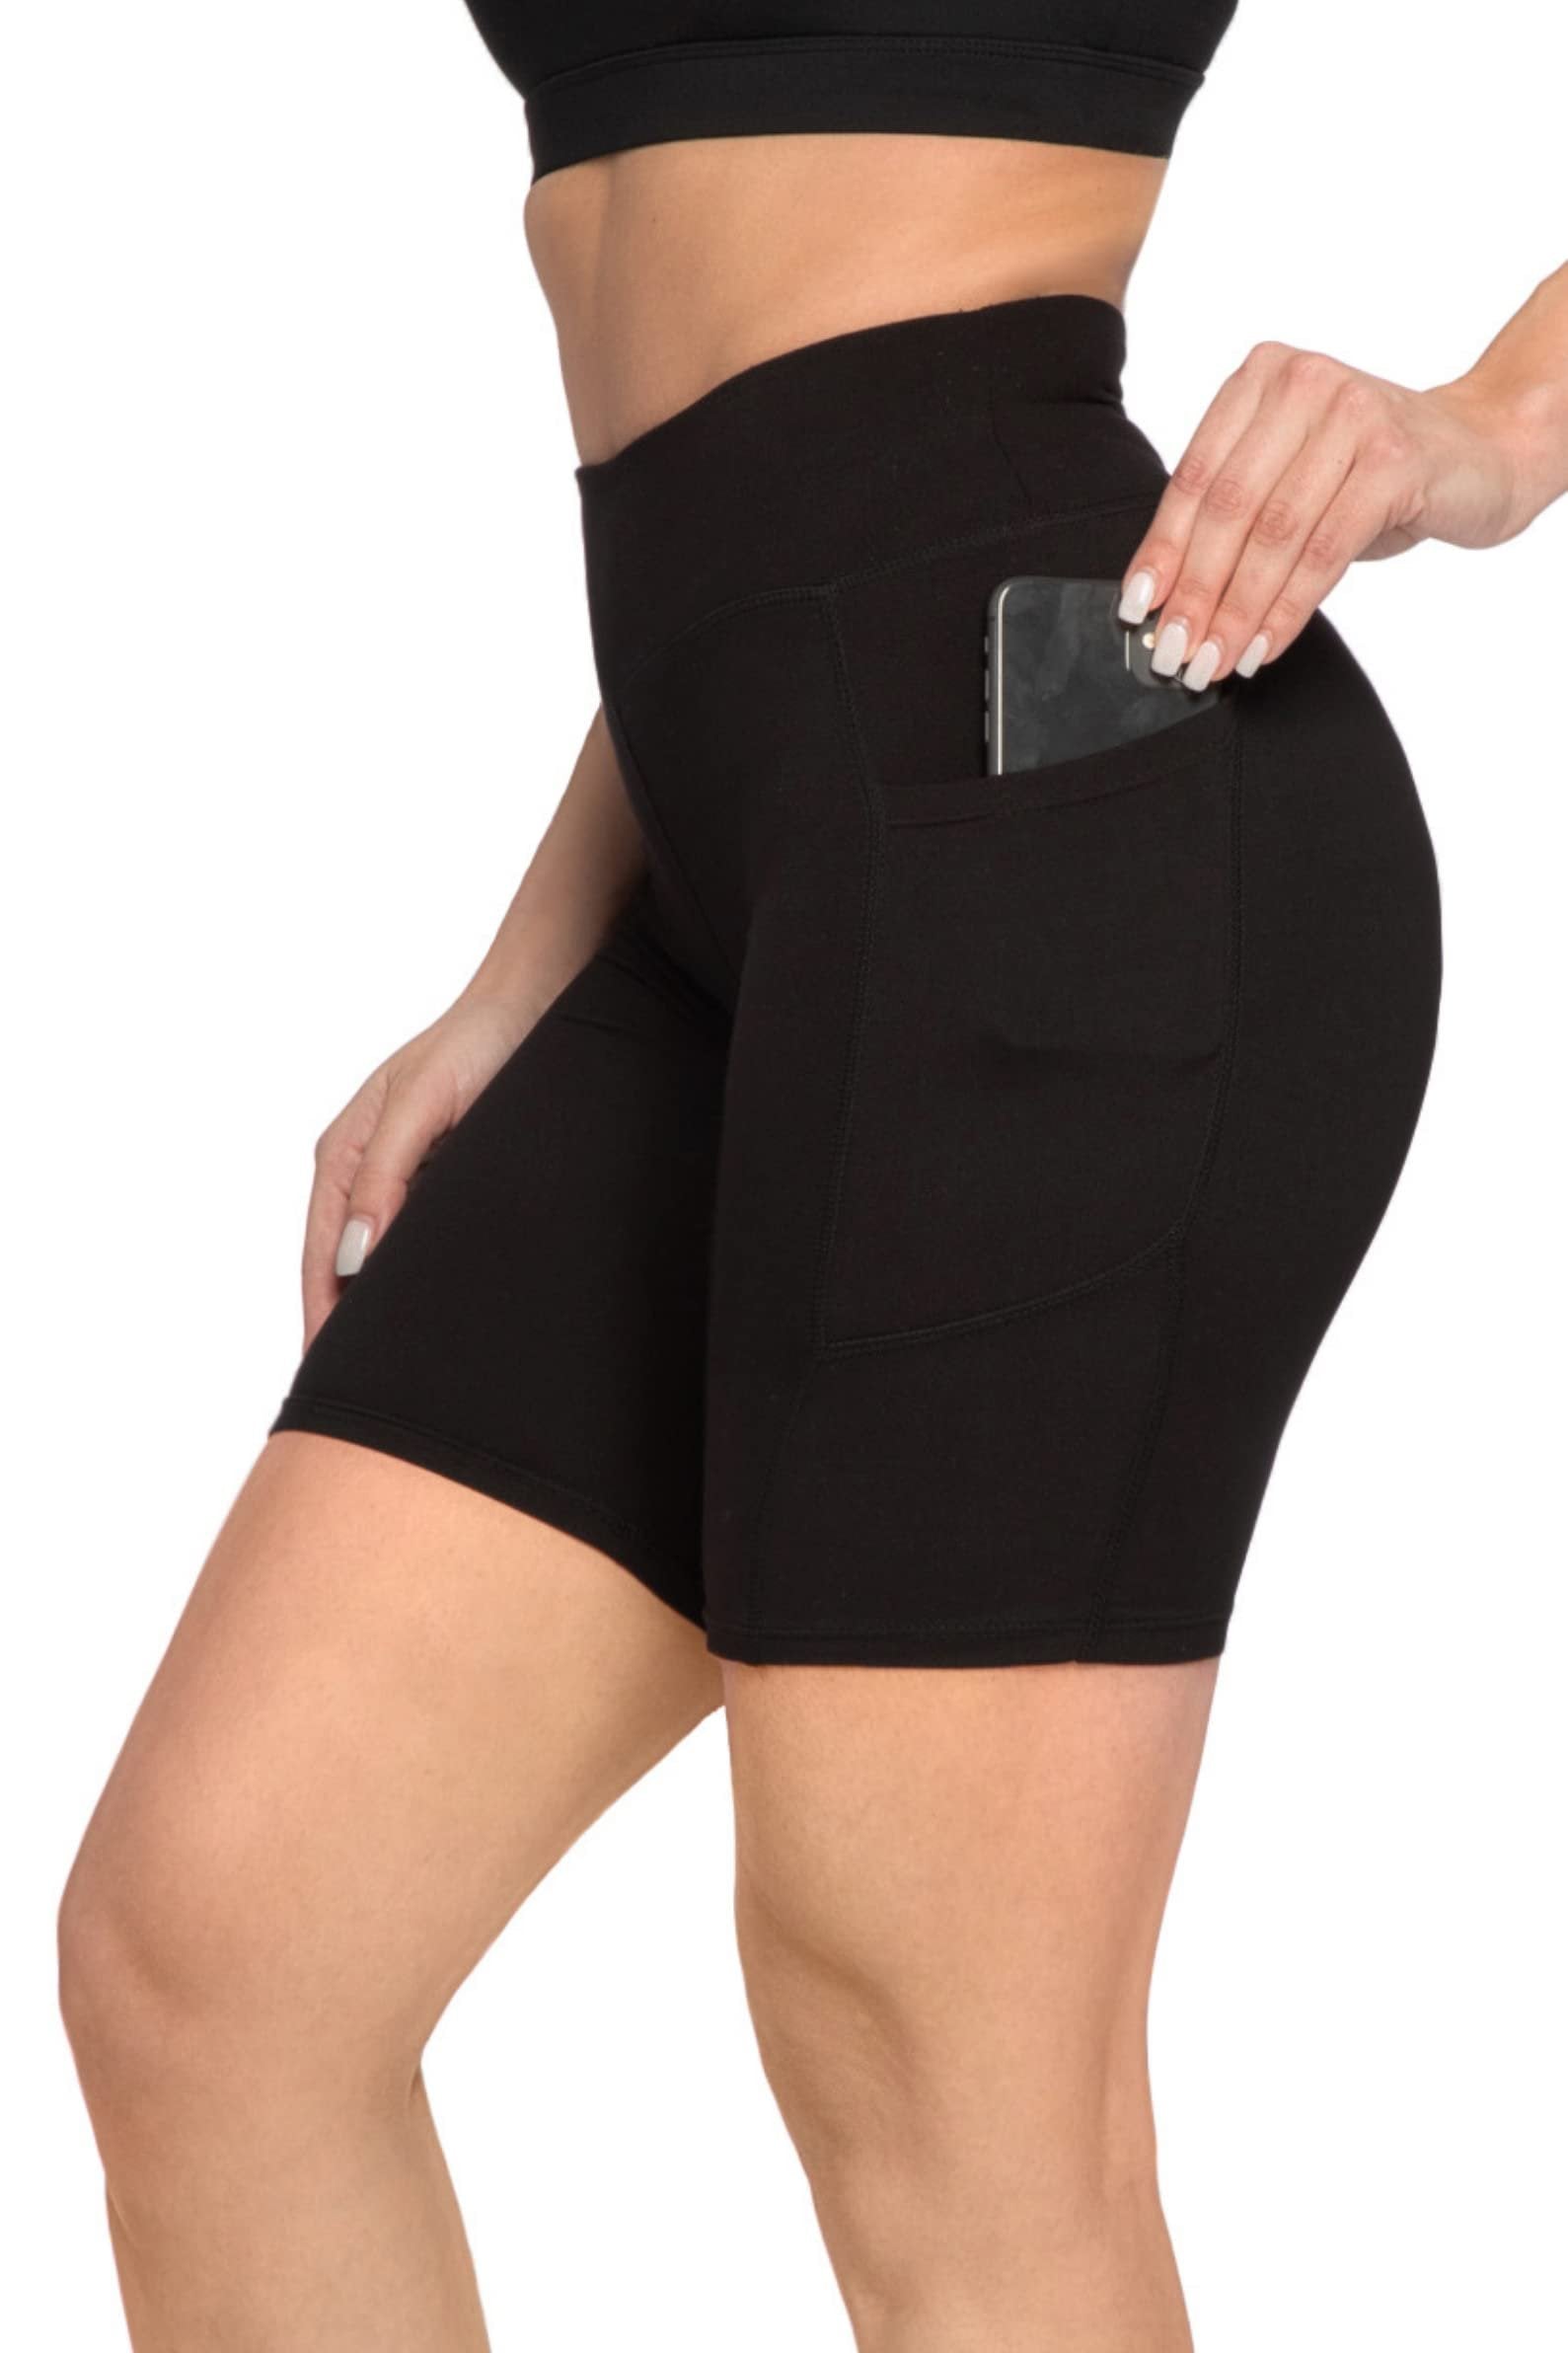 SATINA Biker Shorts for Women - High Waist Biker Shorts with Pockets - Yoga Shorts for Regular & Plus Size Women (8-Inch, Small, Black Shorts)